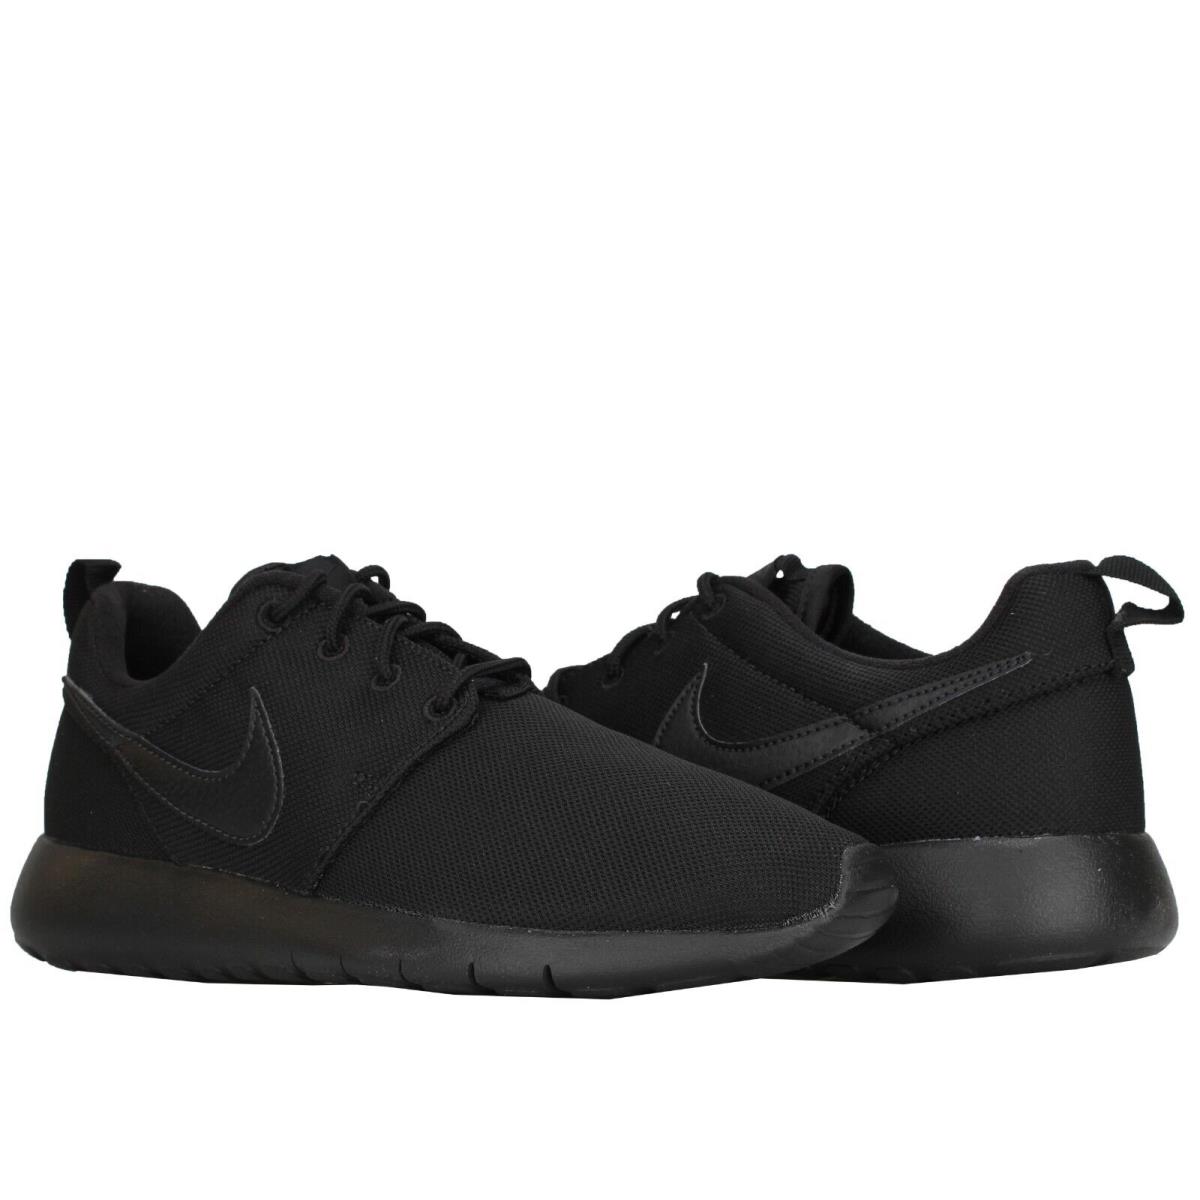 Nike Roshe One Black/black-noir 599728-031 Big Kids GS Size 3.5 - Black